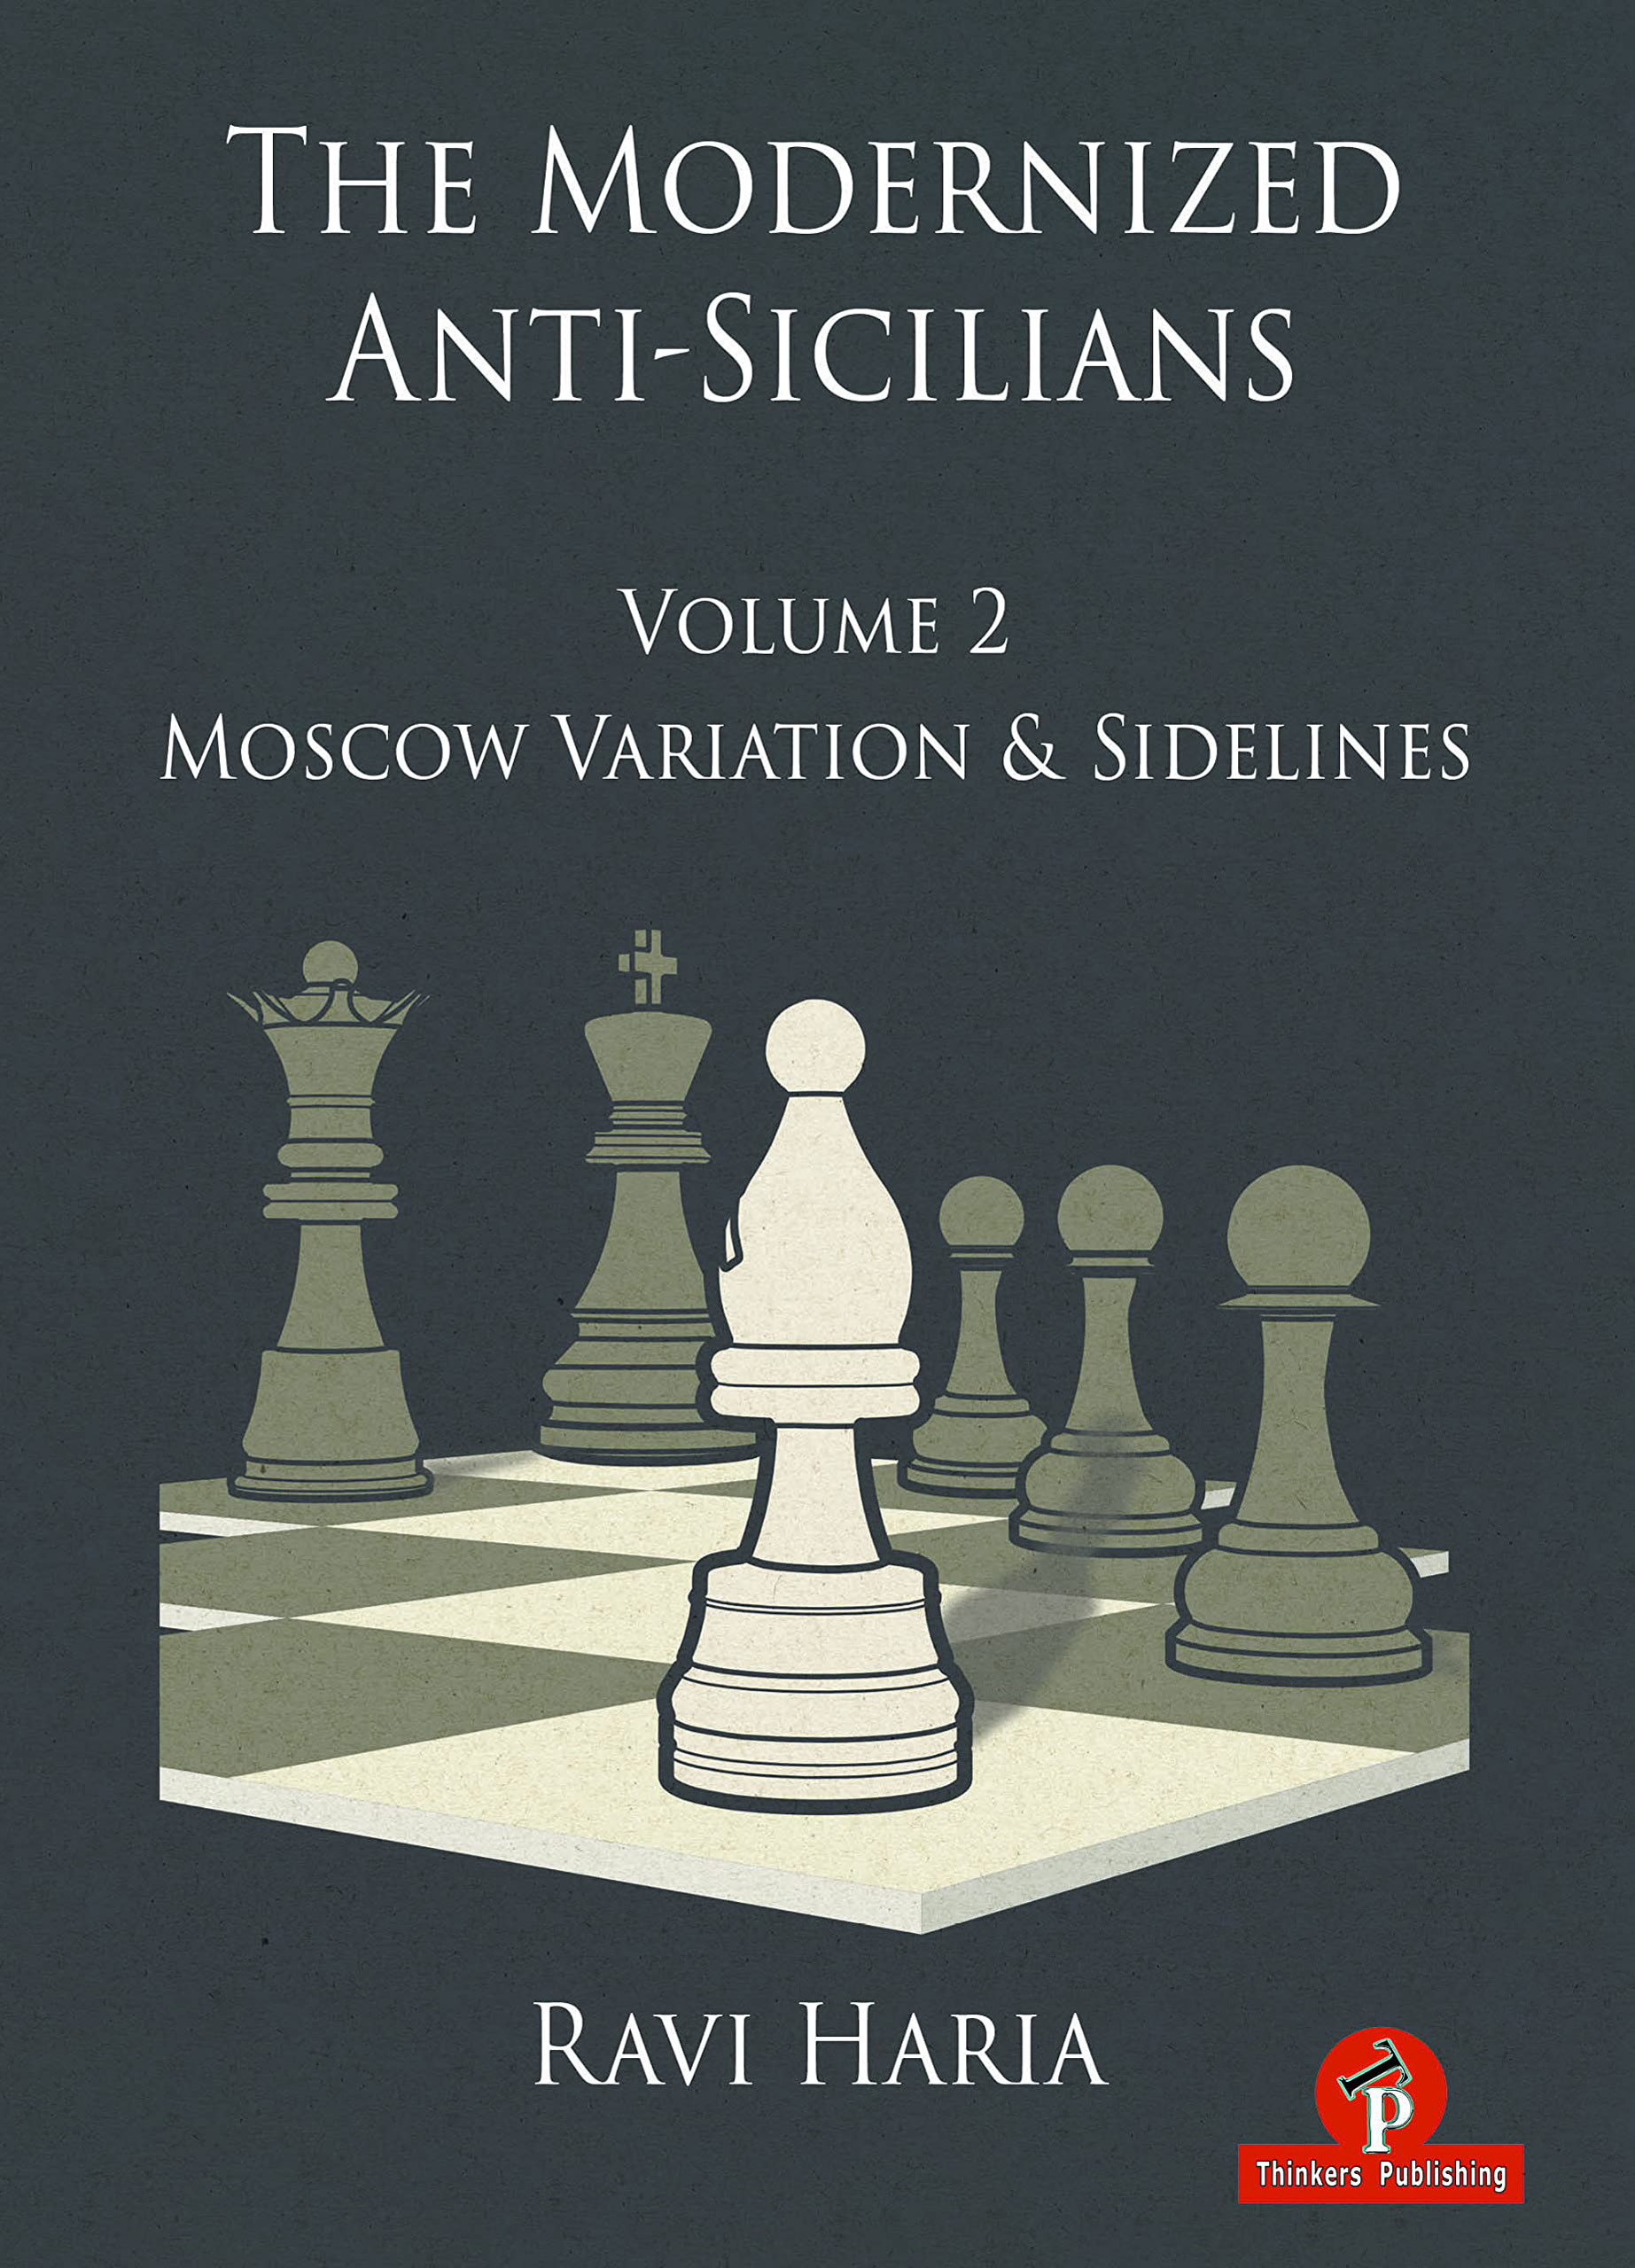 The Modernized Anti-Sicilians Volume 2